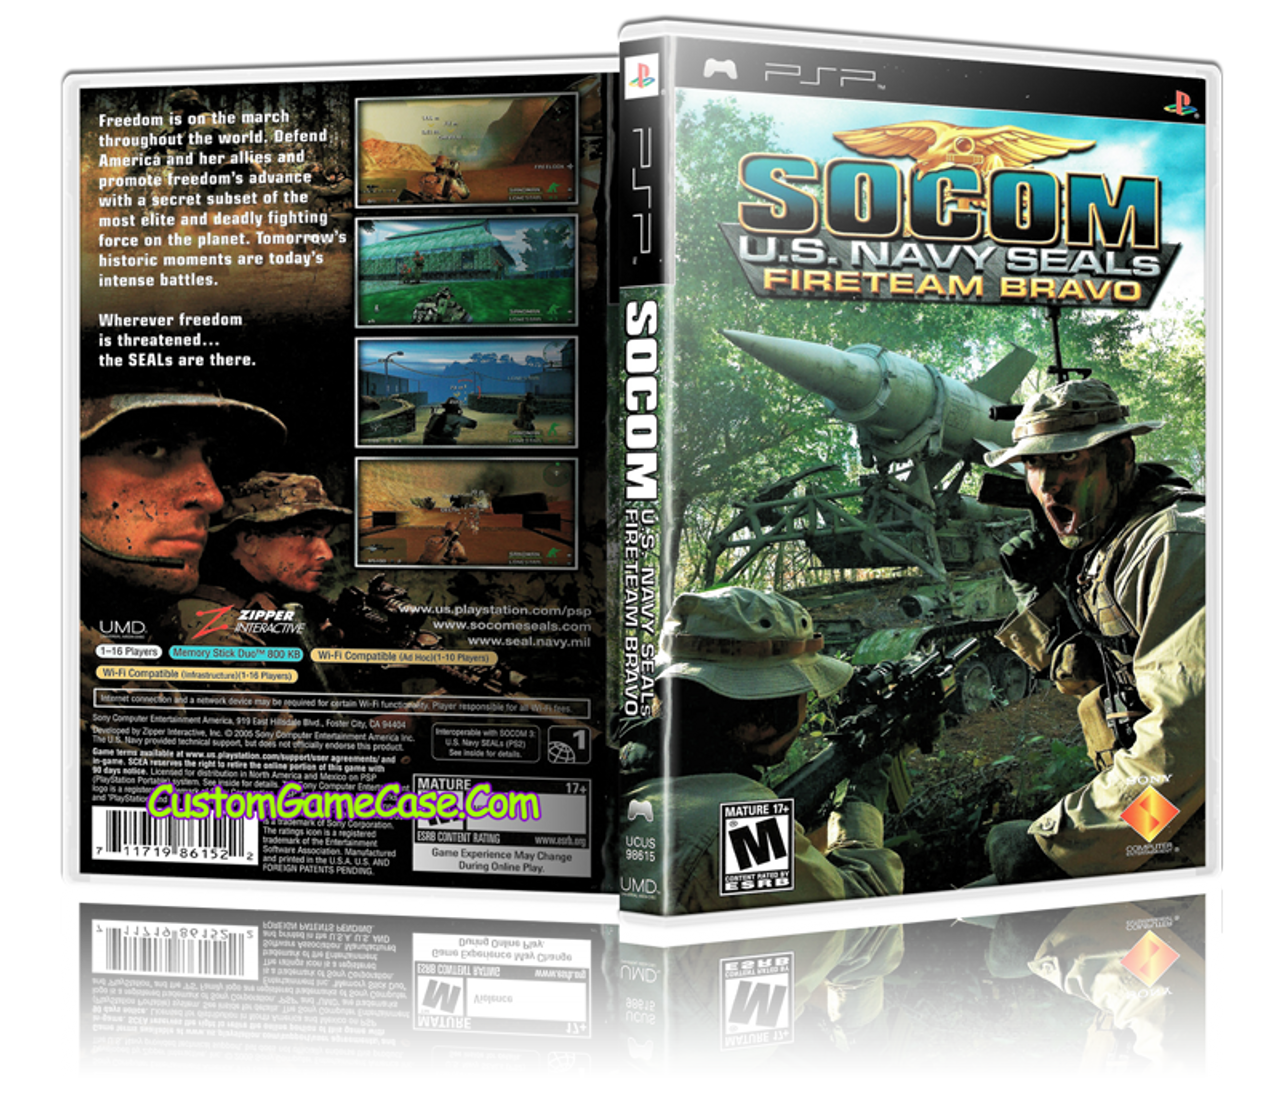 SOCOM US Navy Seals Fireteam Bravo 2 (PSP) - The Cover Project